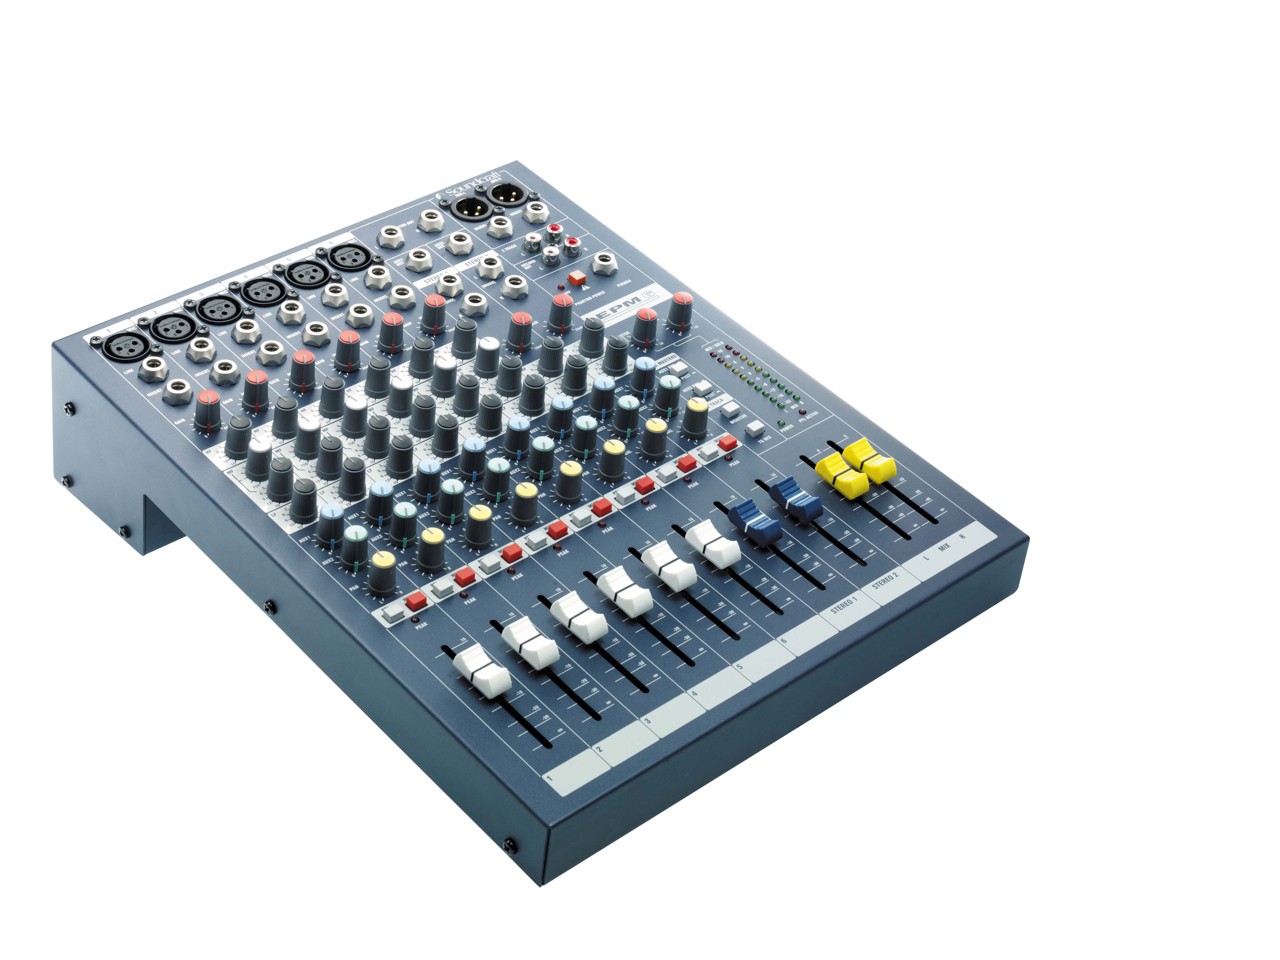 Soundcraft Epm6 - Analog mixing desk - Variation 2